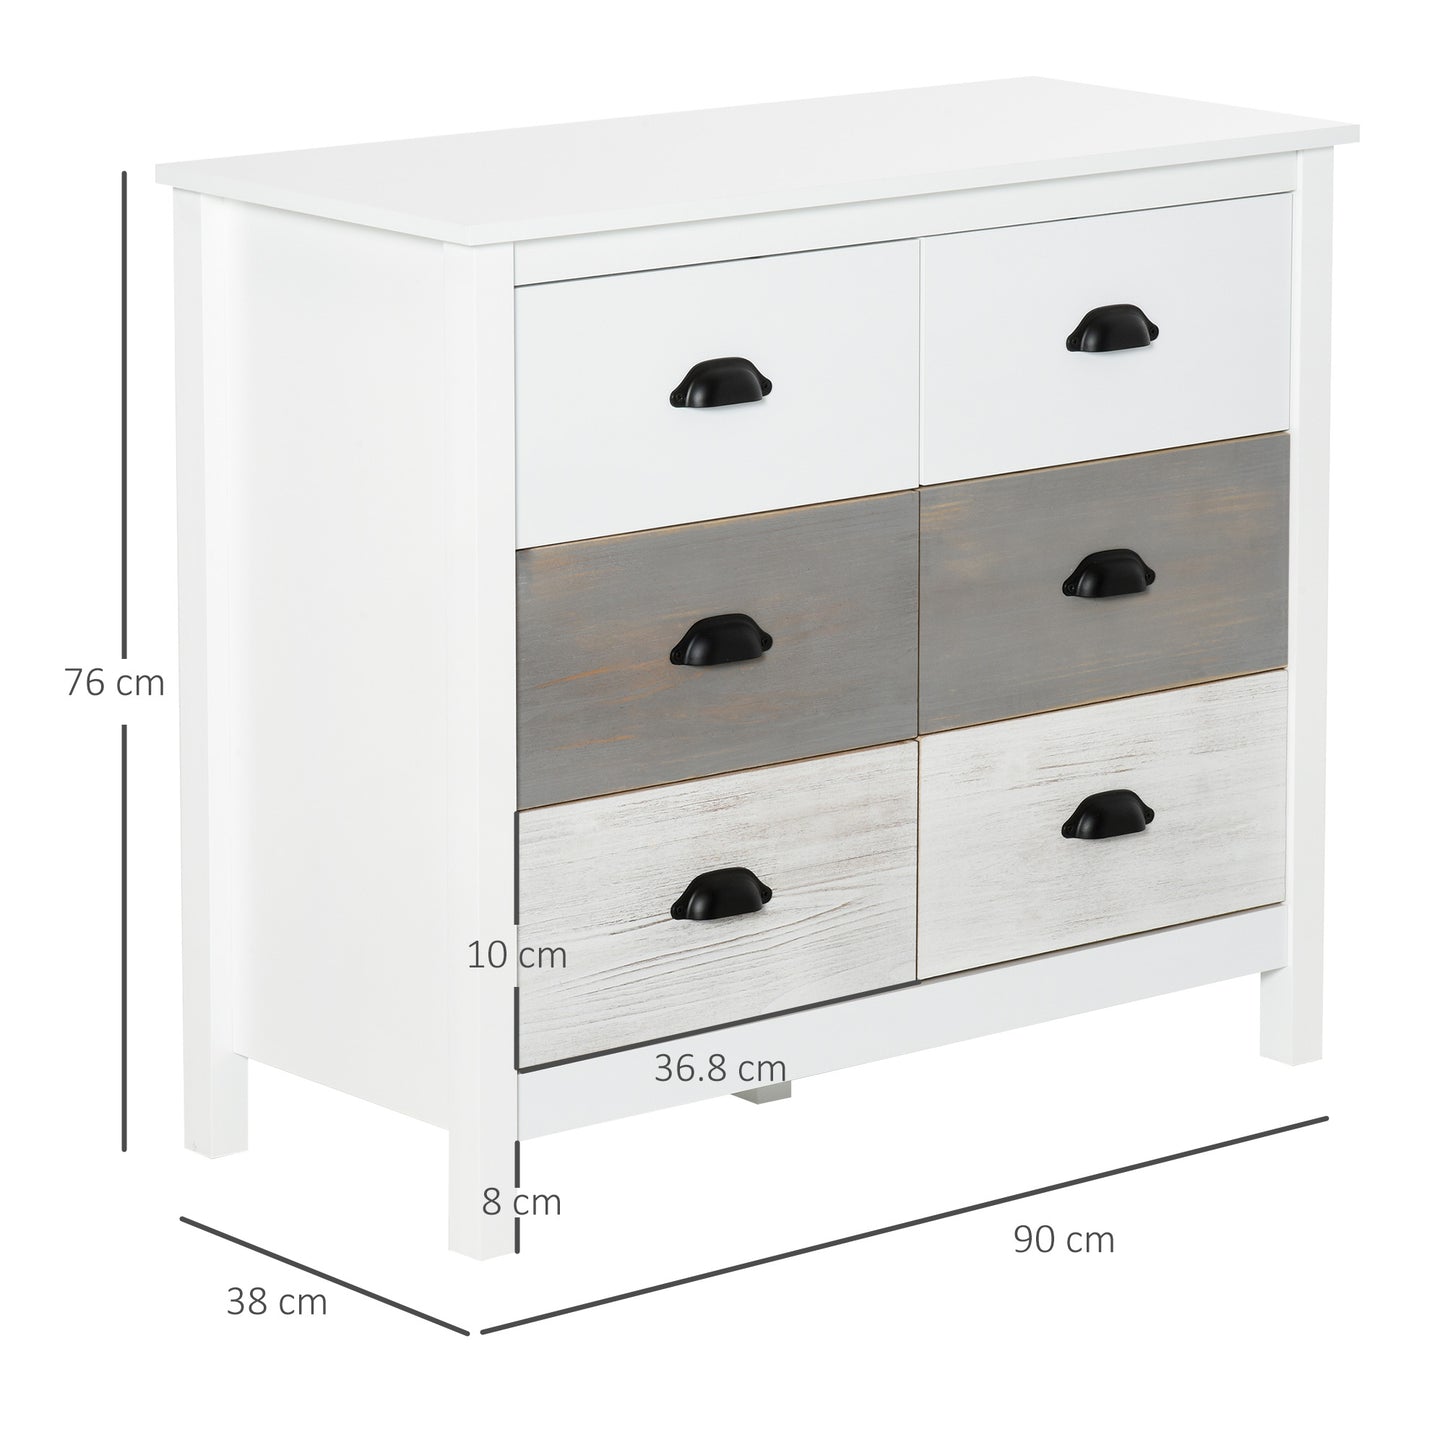 HOMCOM Side Cabinet Home Organizer with Storage Drawer Unit for Bedroom, Living Room